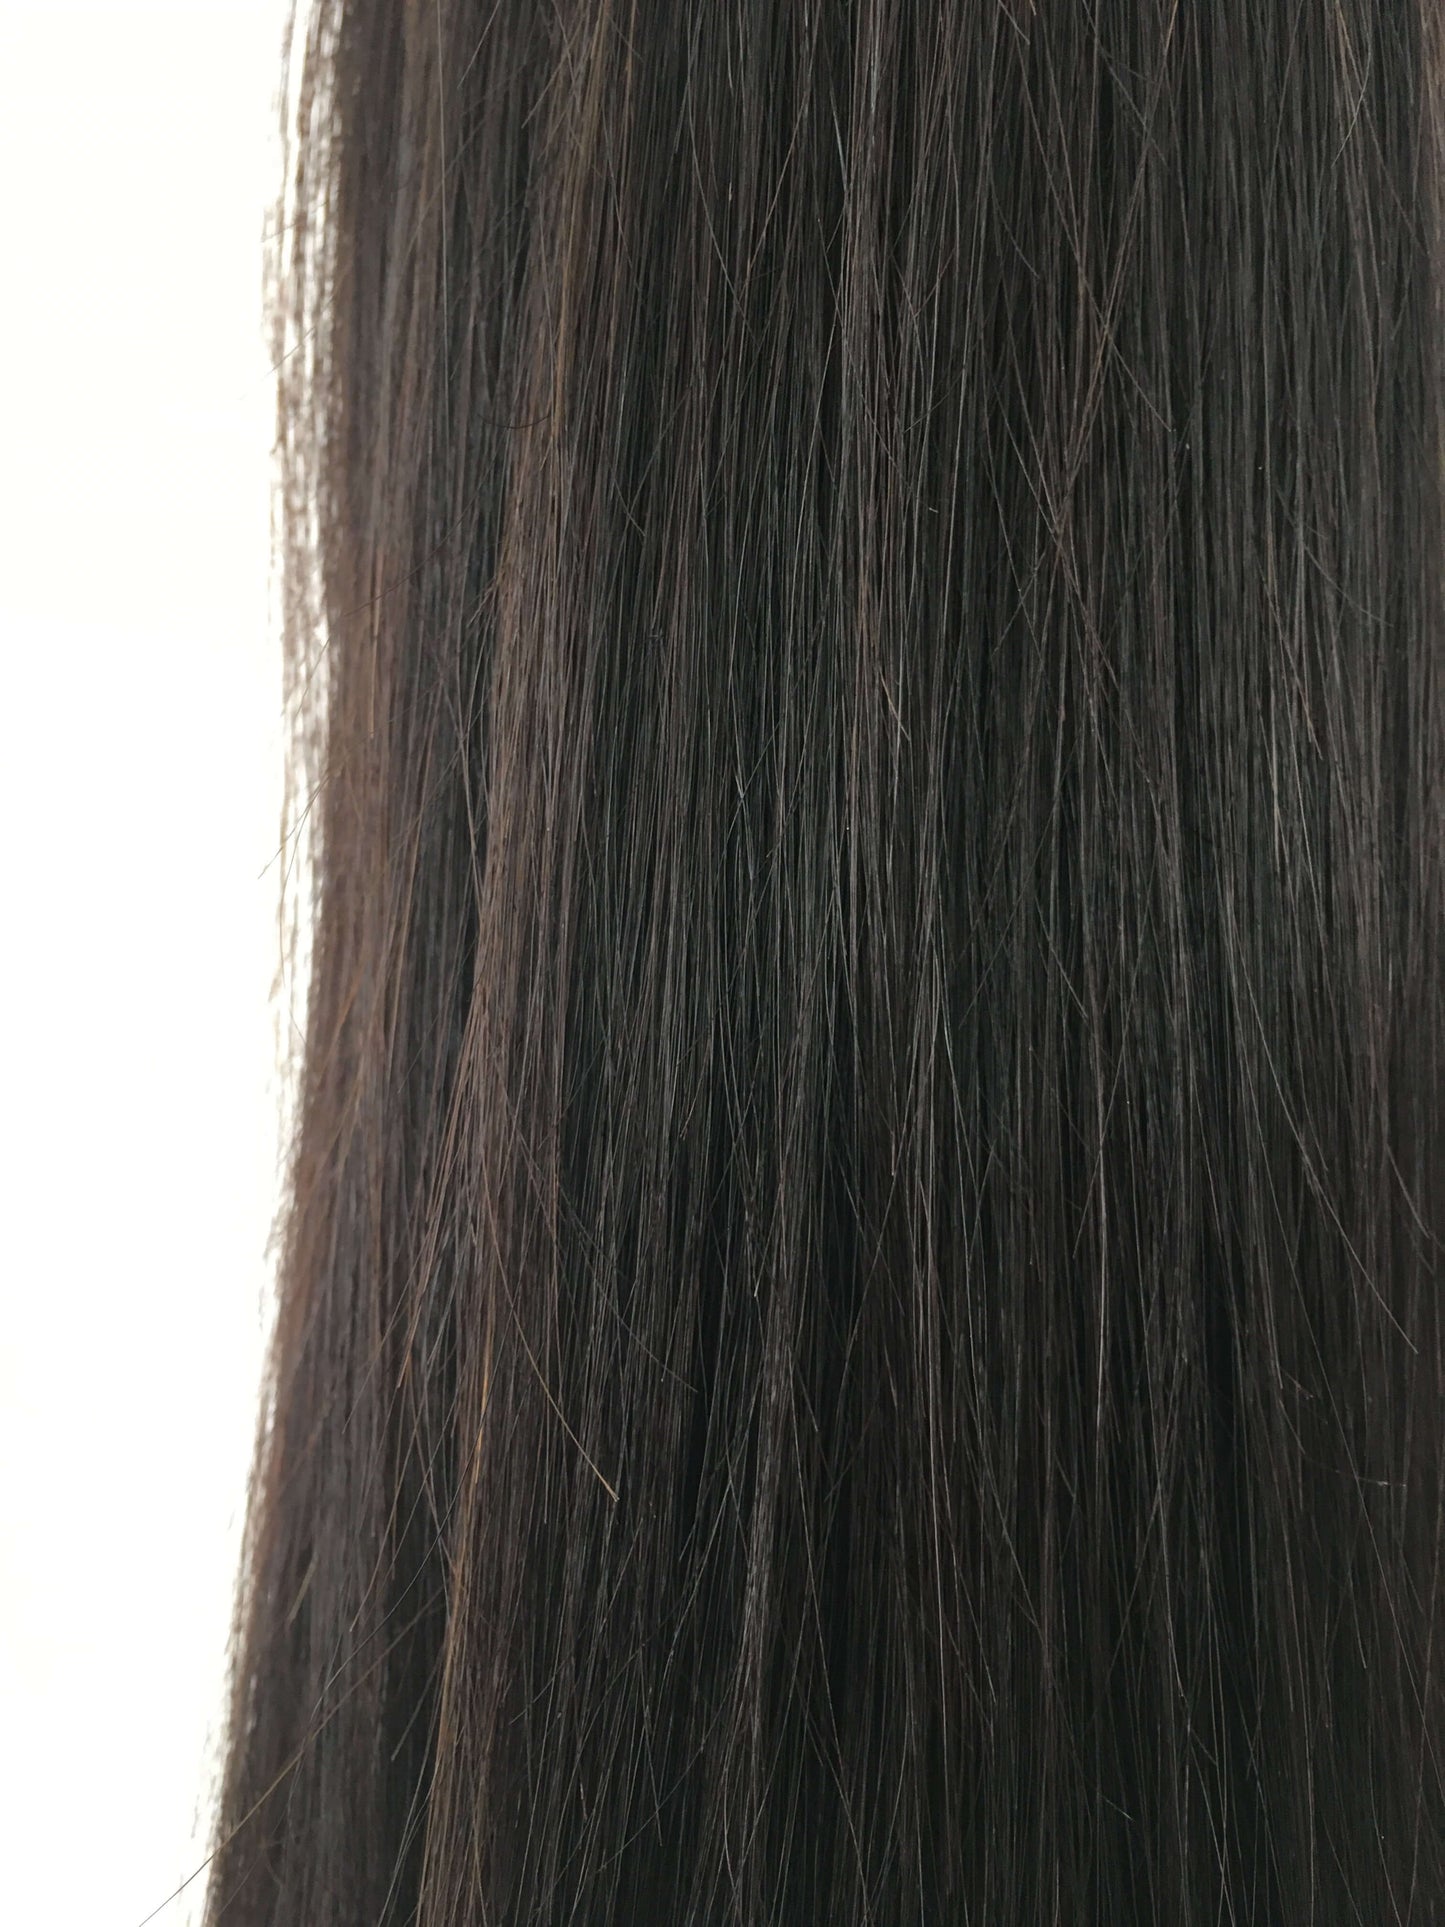 Brazilian Virgin Remy Human Hair - Wefts, 24'',Straight, Virgin,100g - Quick Shipping